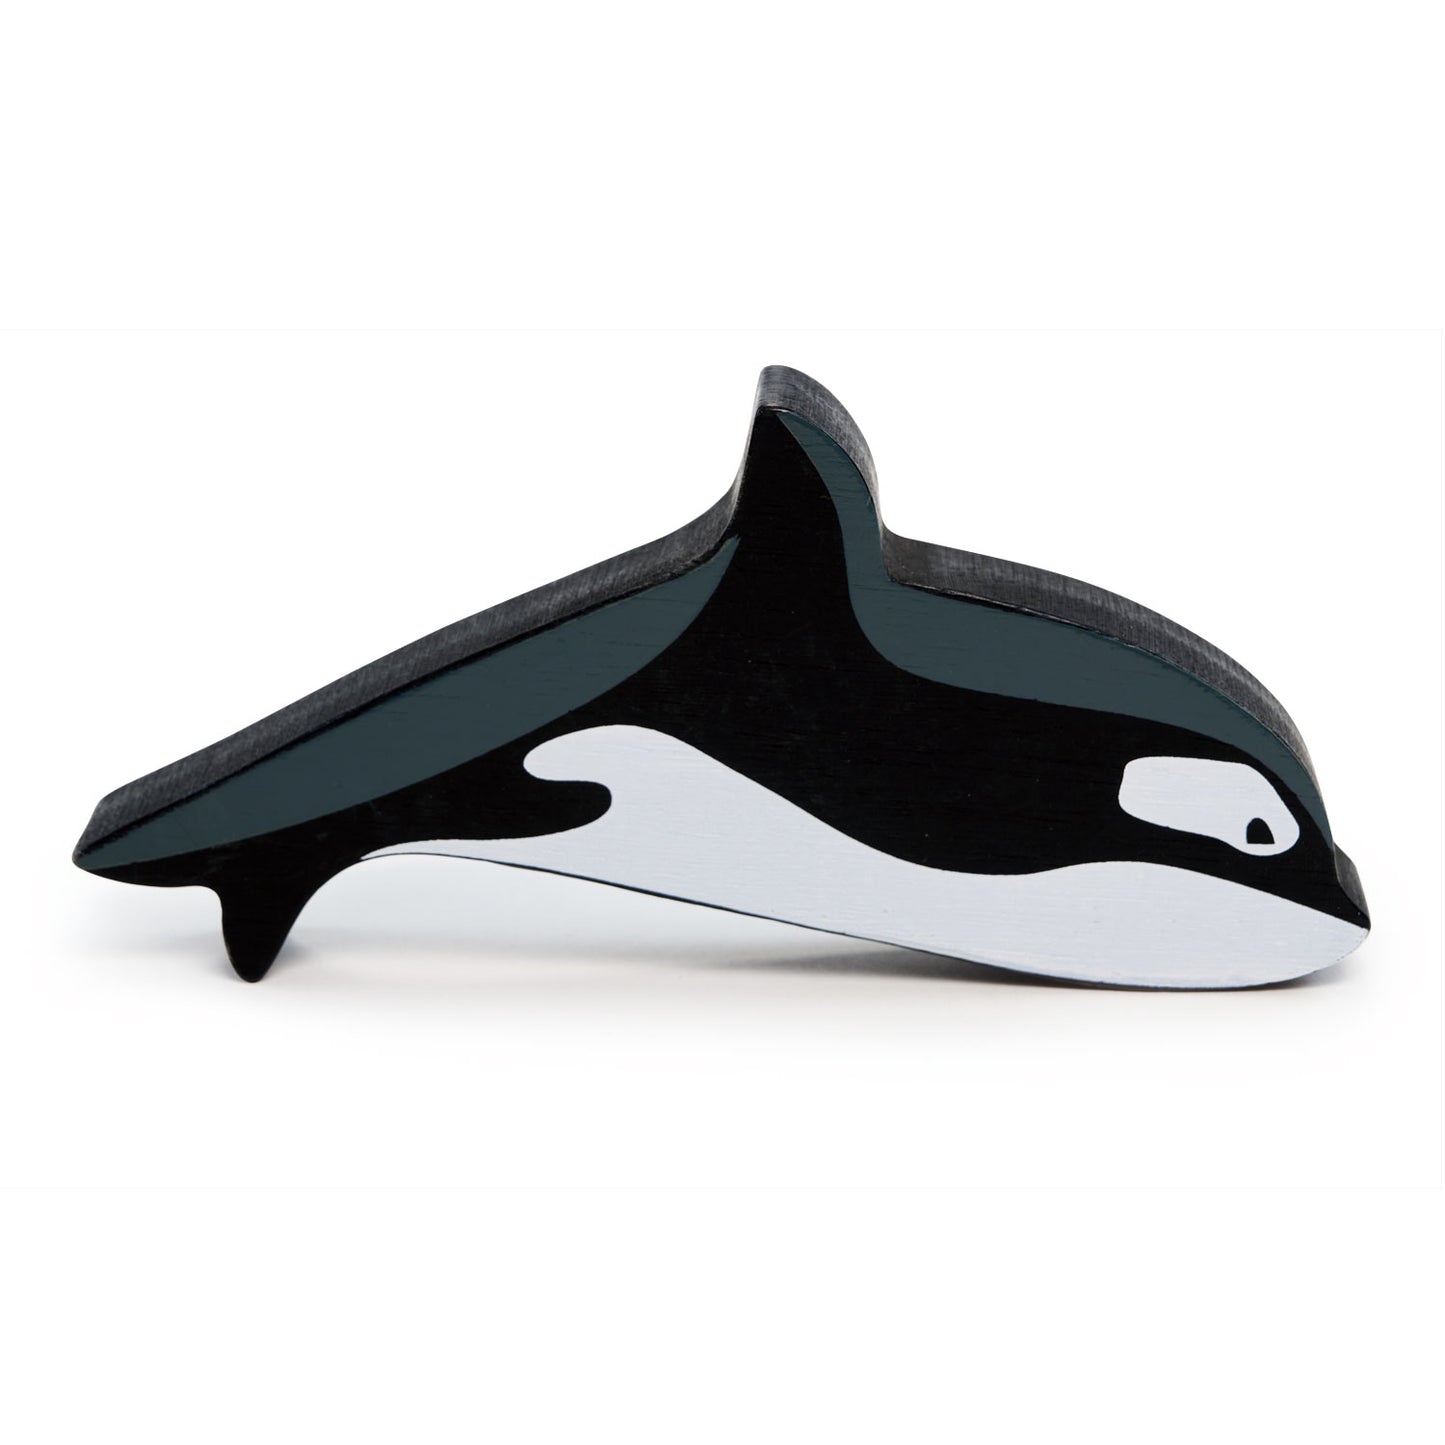 Tenderleaf Toys Orca Whale Wooden Figure